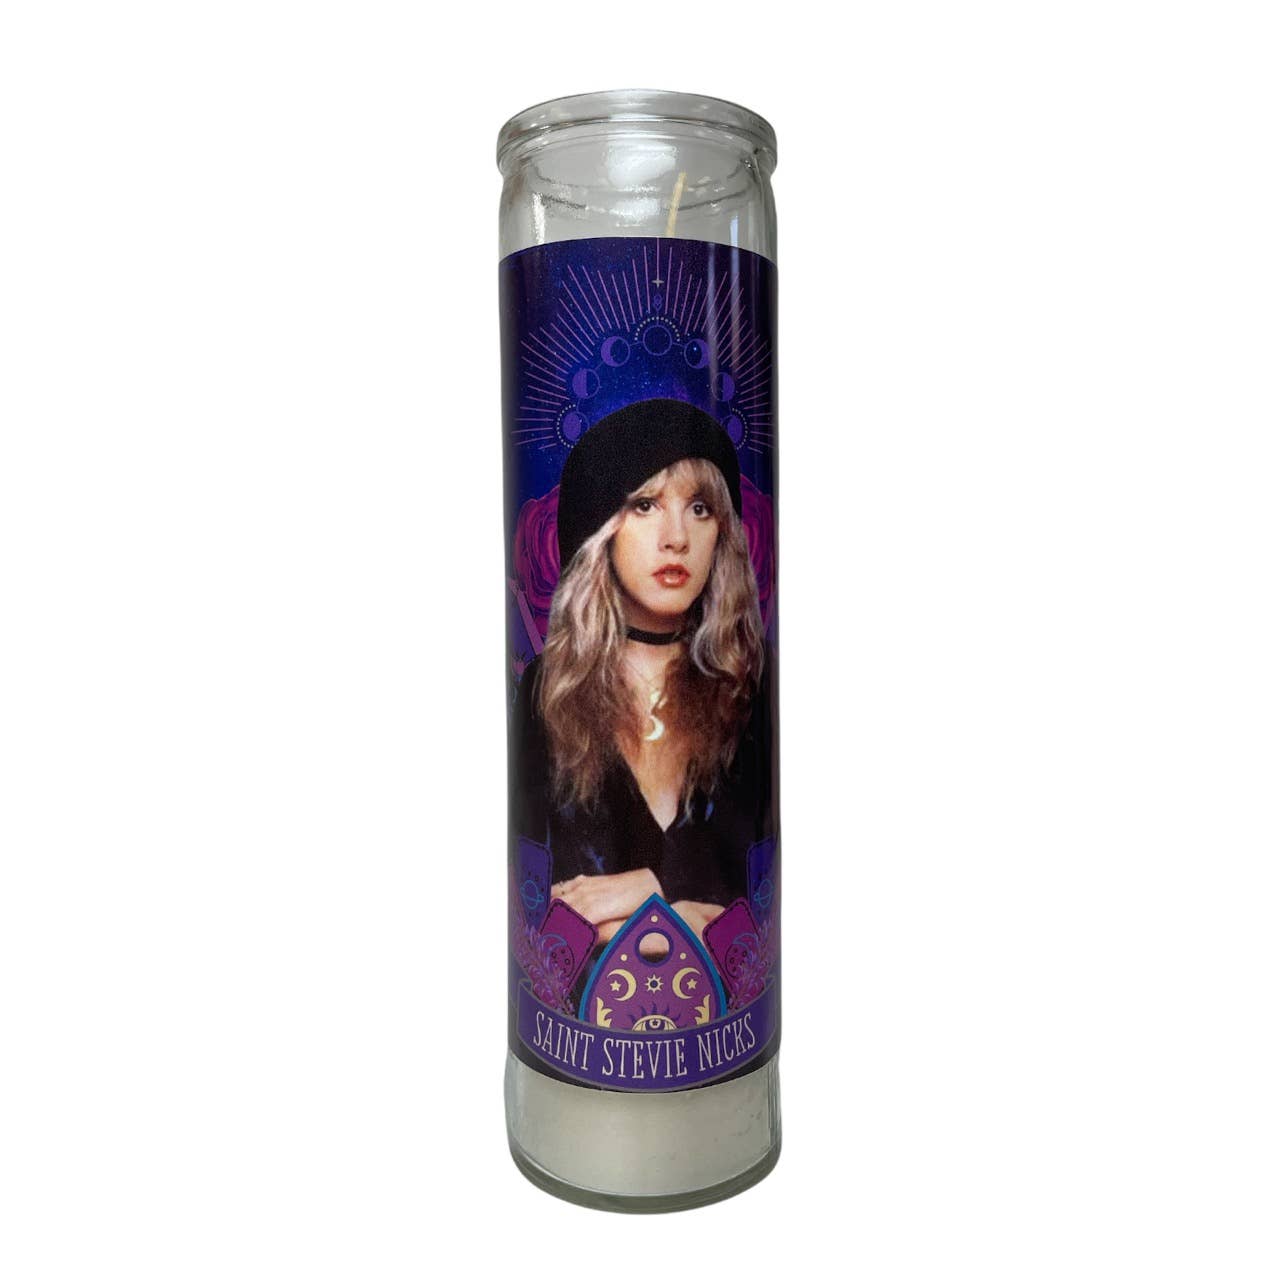 The Luminary Stevie Nicks Altar Candle